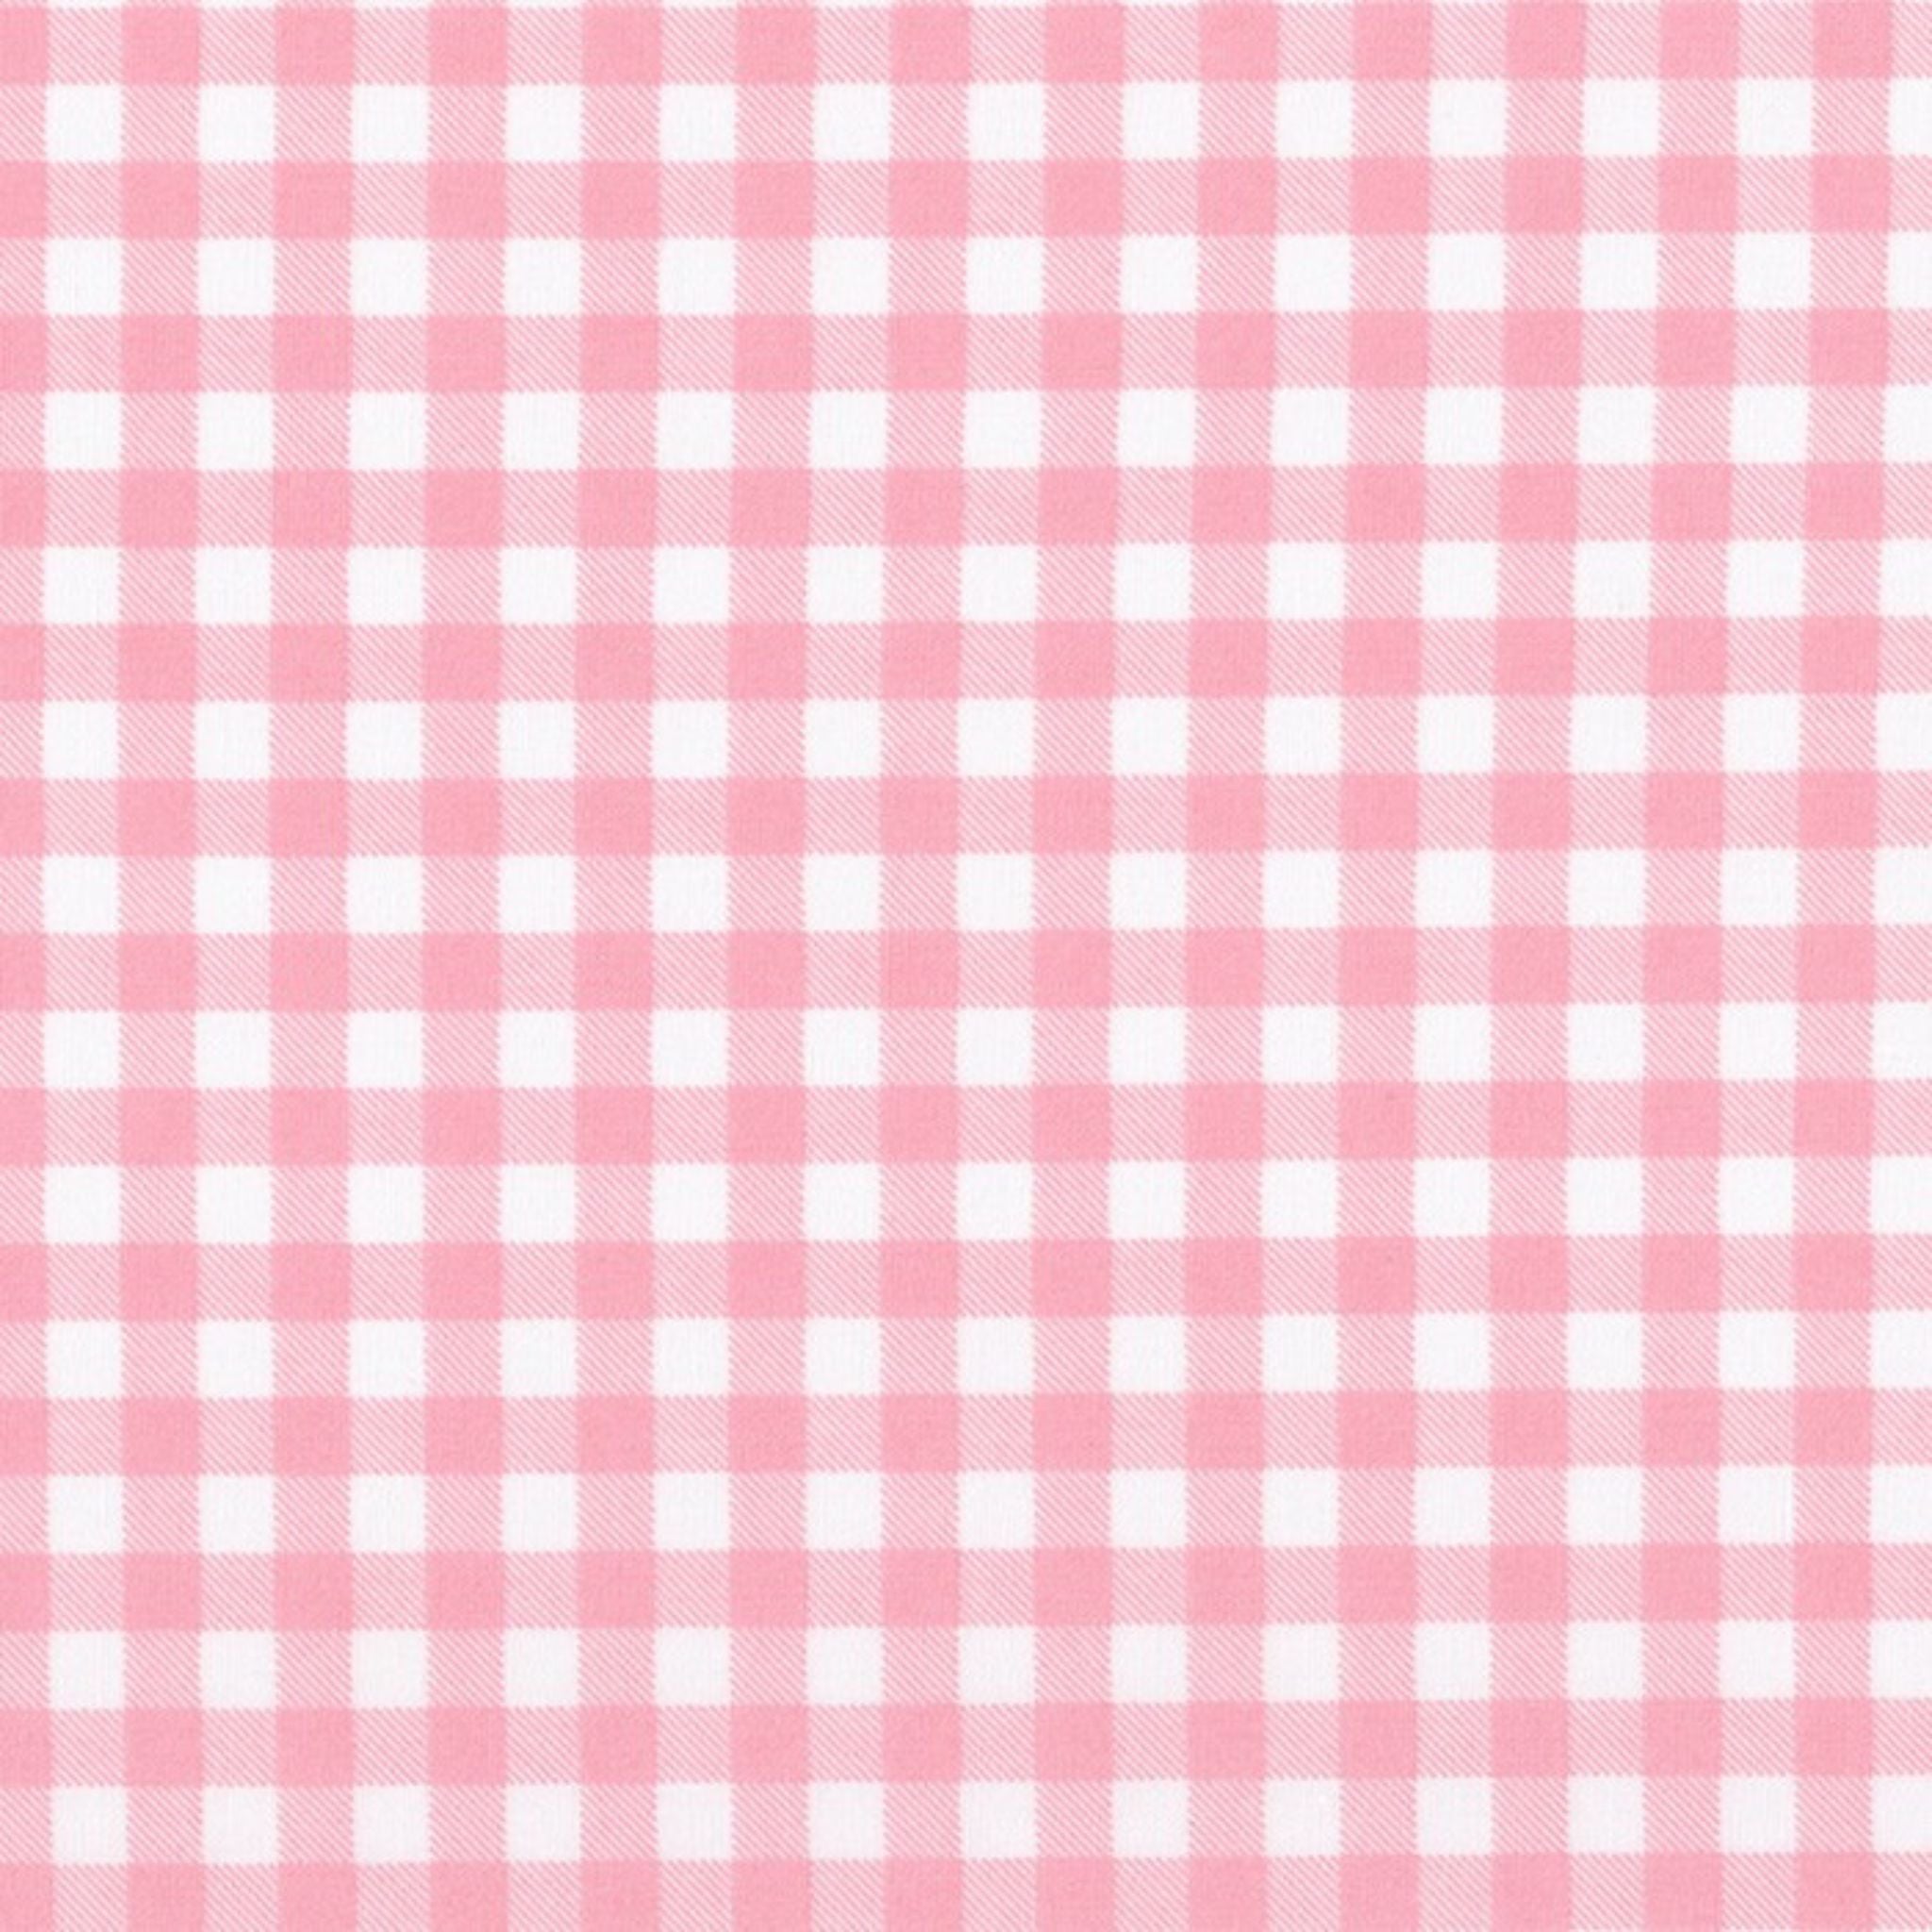 pink gingham cotton fabric - Petite Basics - Sevenberry